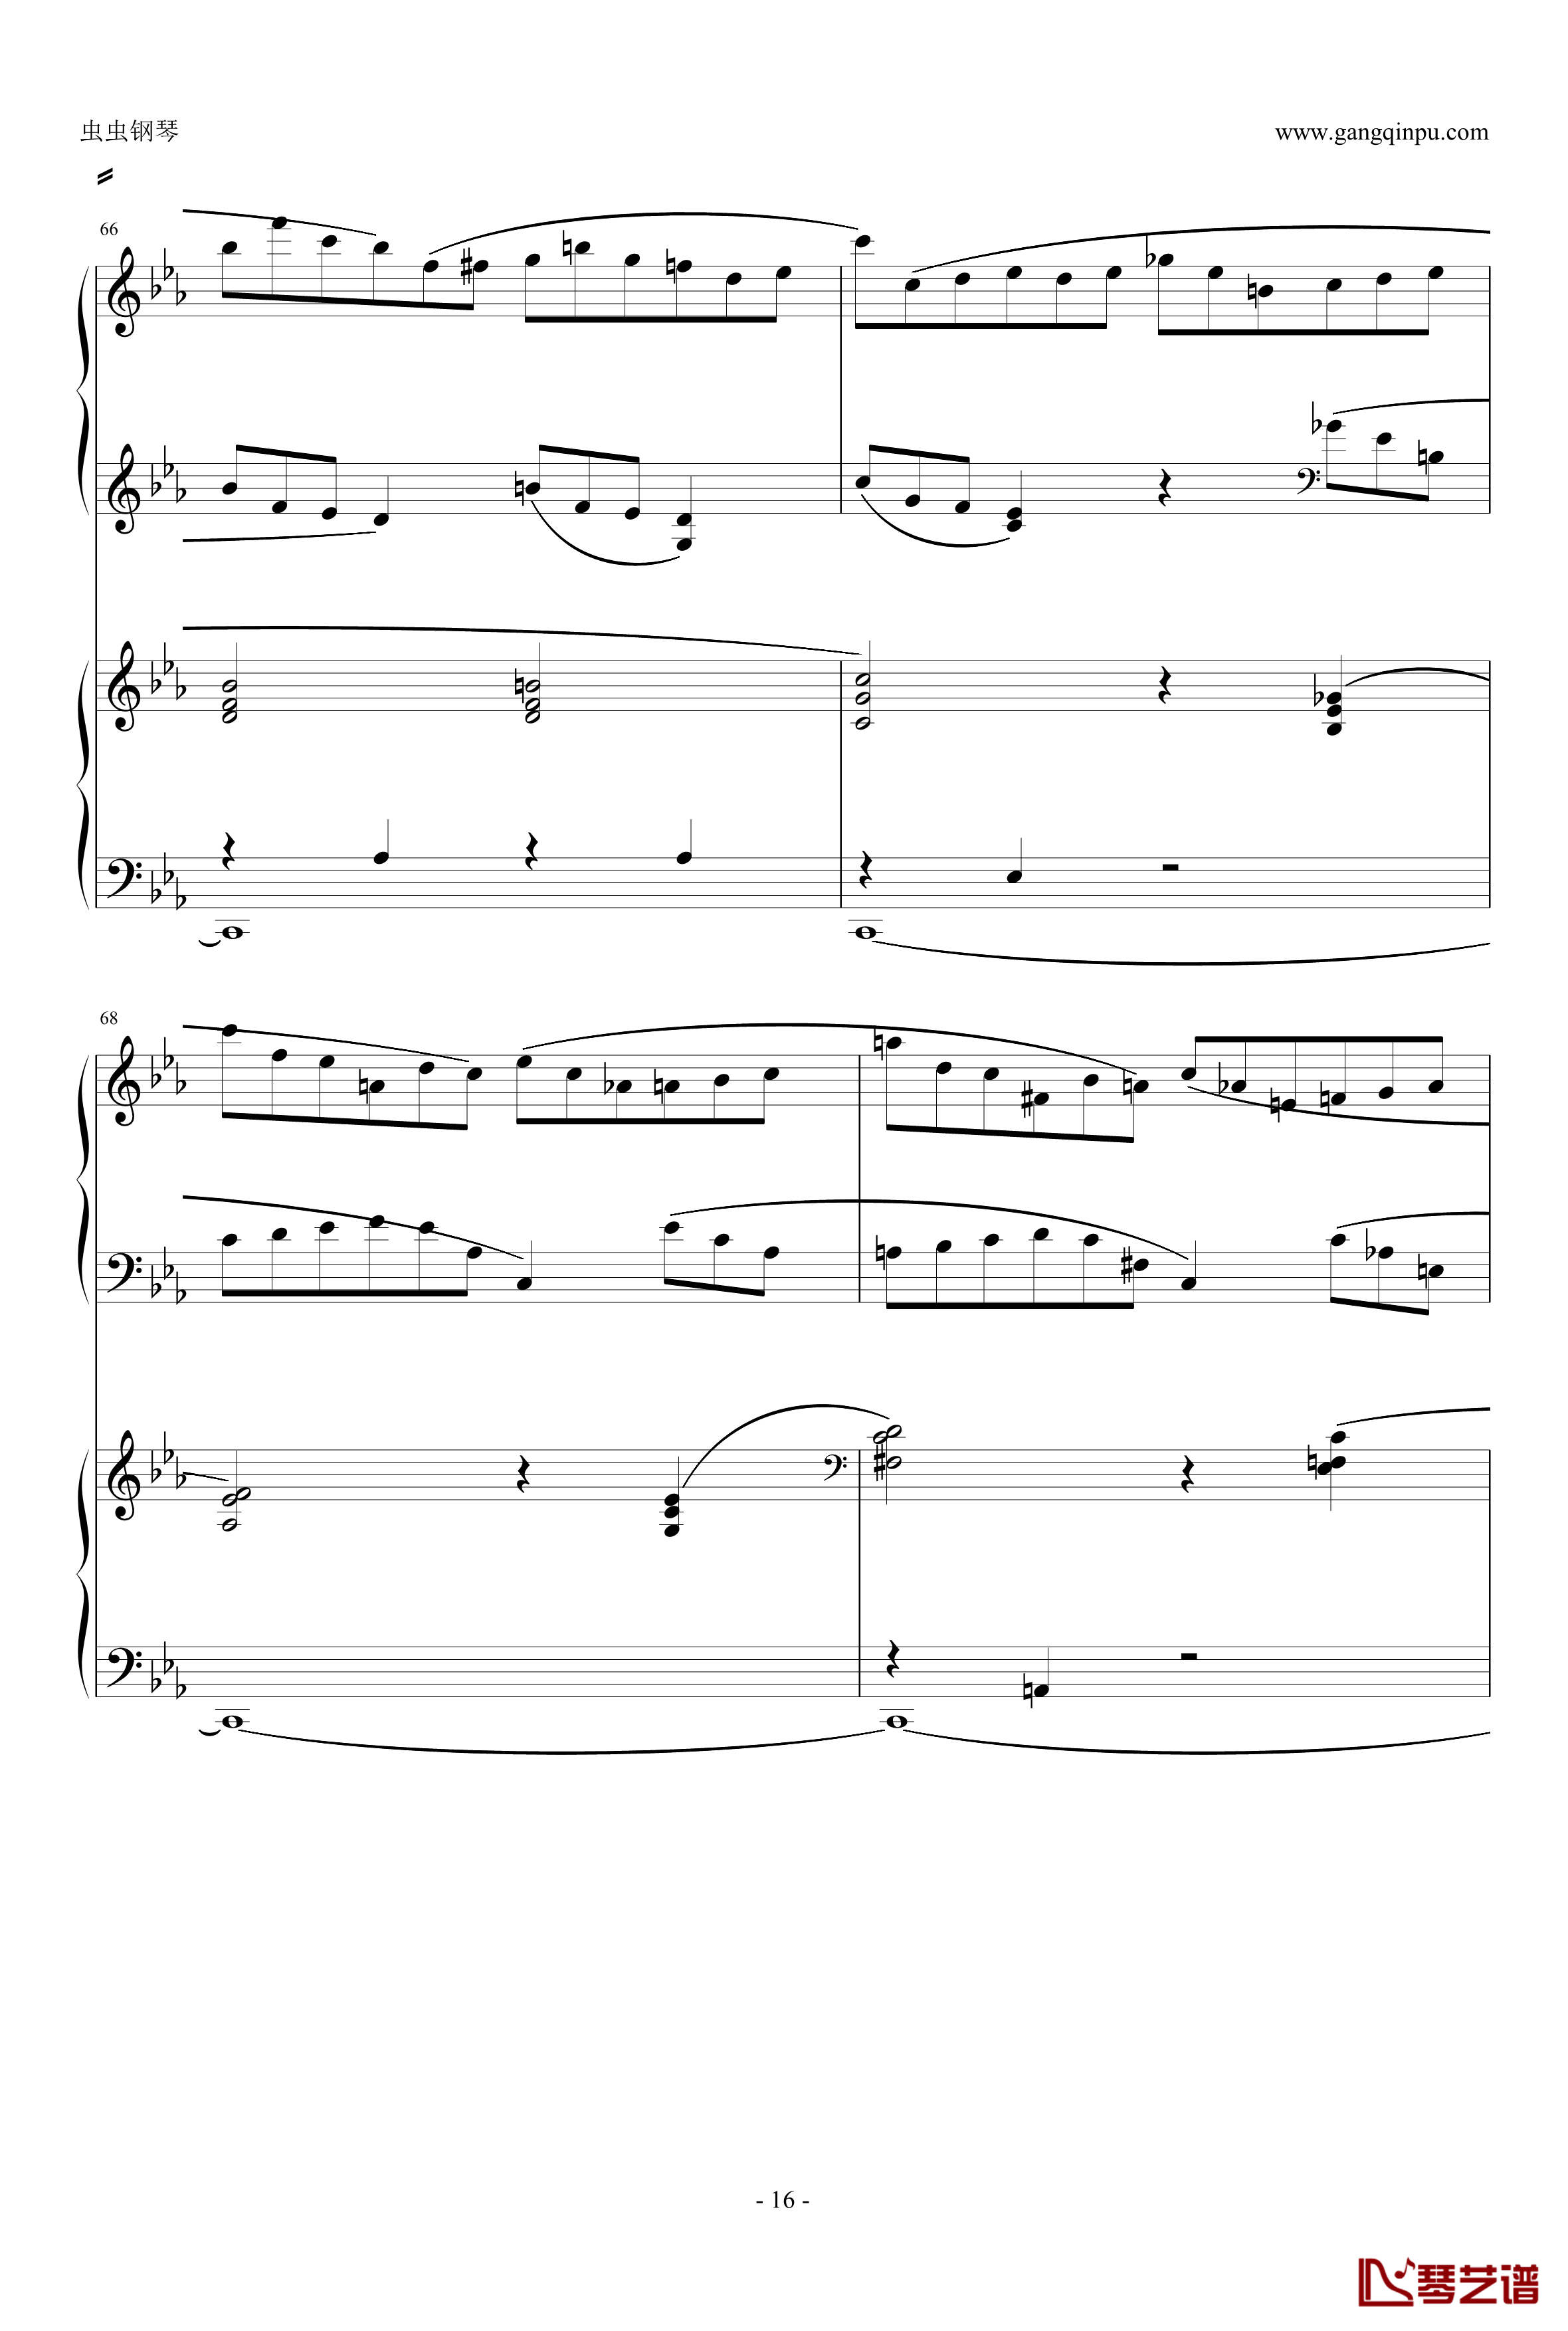 c小调第2钢琴协奏曲钢琴谱-拉赫马尼若夫16